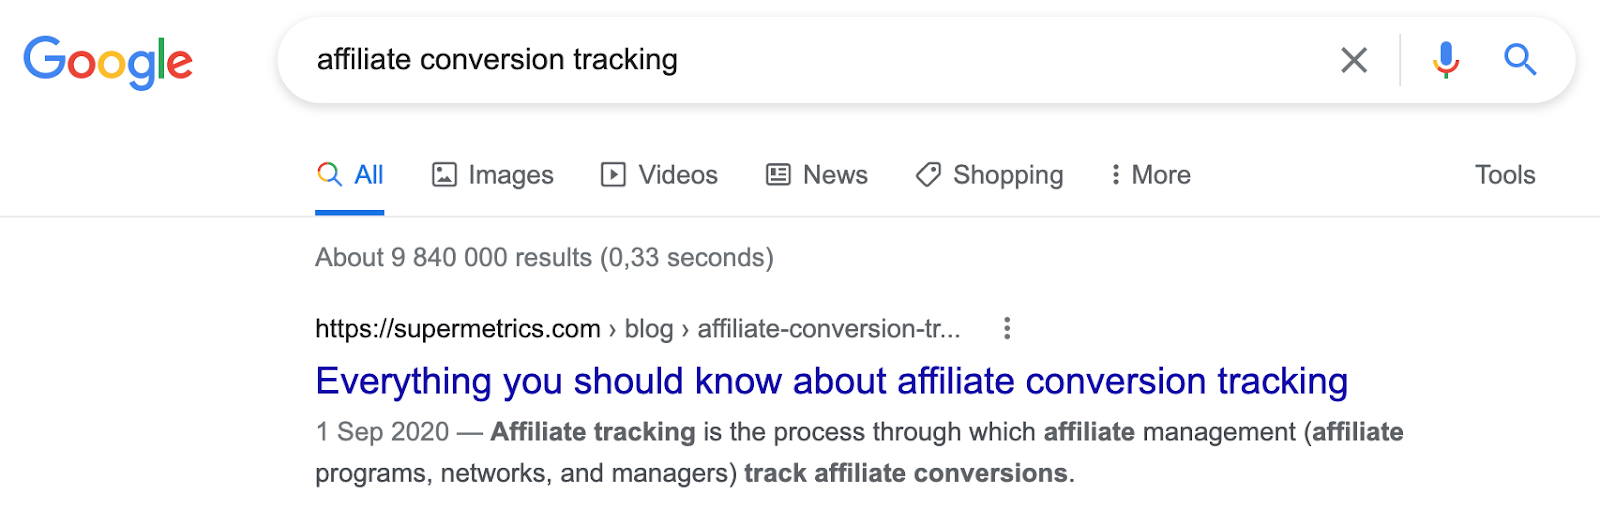 meta description example for "affiliate conversion tracking"